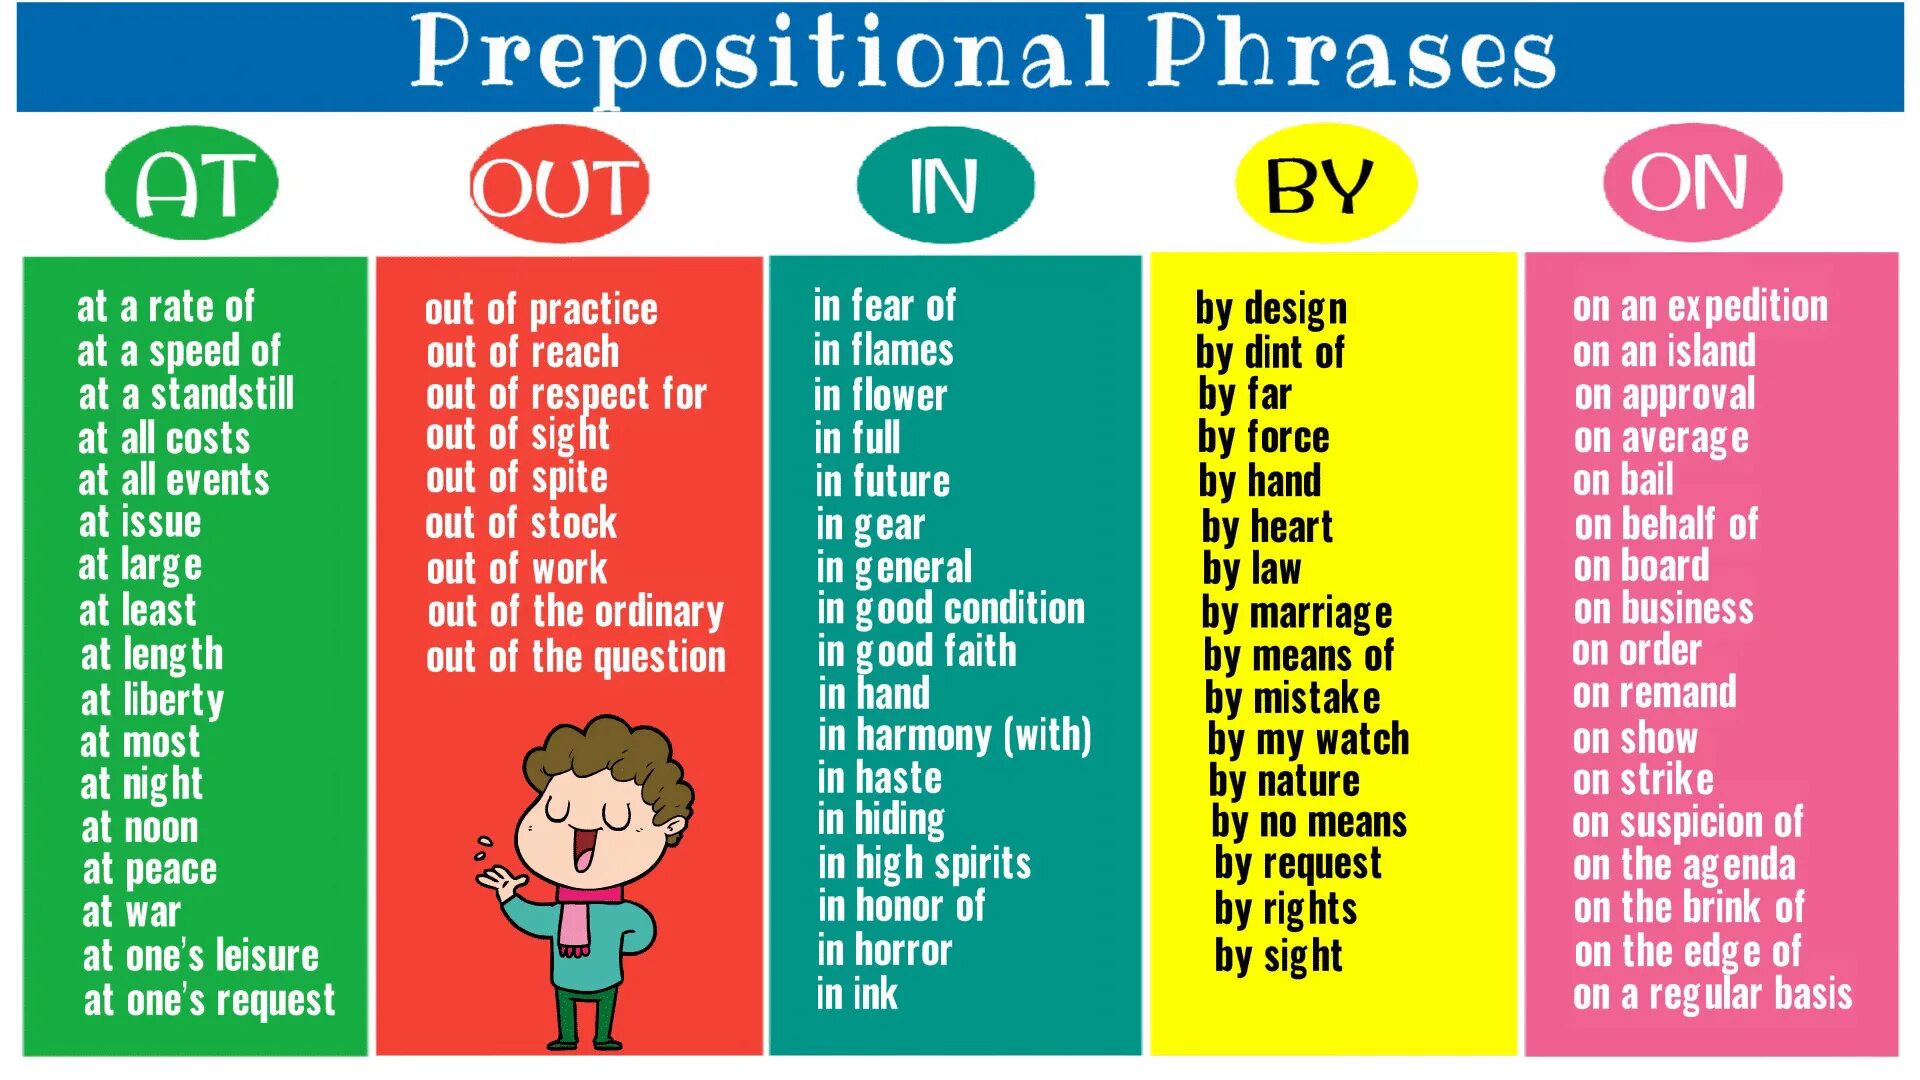 Preposition list. Prepositional phrases в английском языке. Preposition Noun phrases. Prepositional phrases список. Prepositional phrases with in.